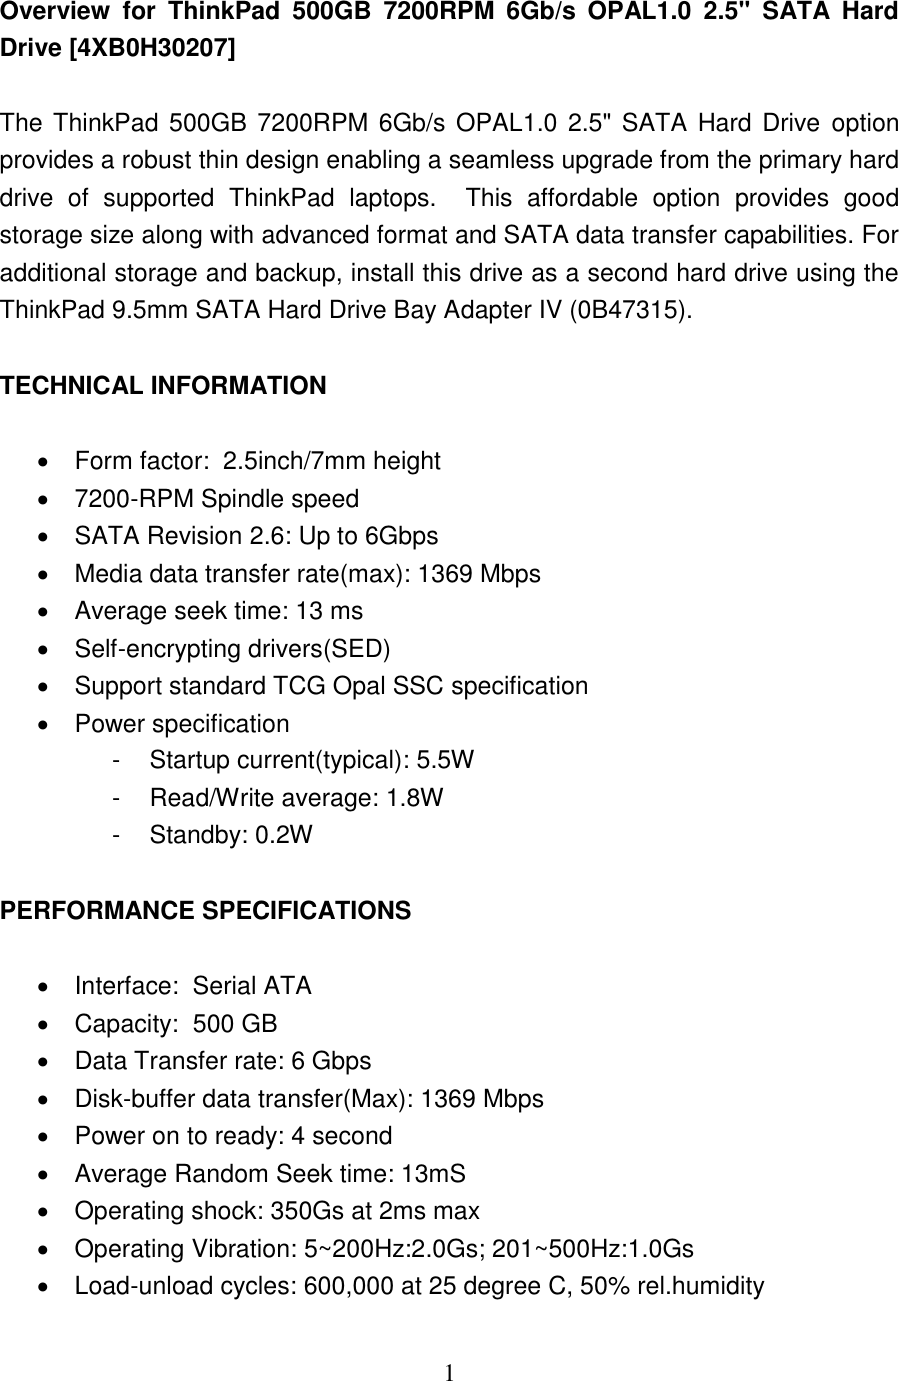 Lenovo Tp226Gb 226Rpm 26Gbs Opal Sata Hd 26Xb26H3262267 User Manual